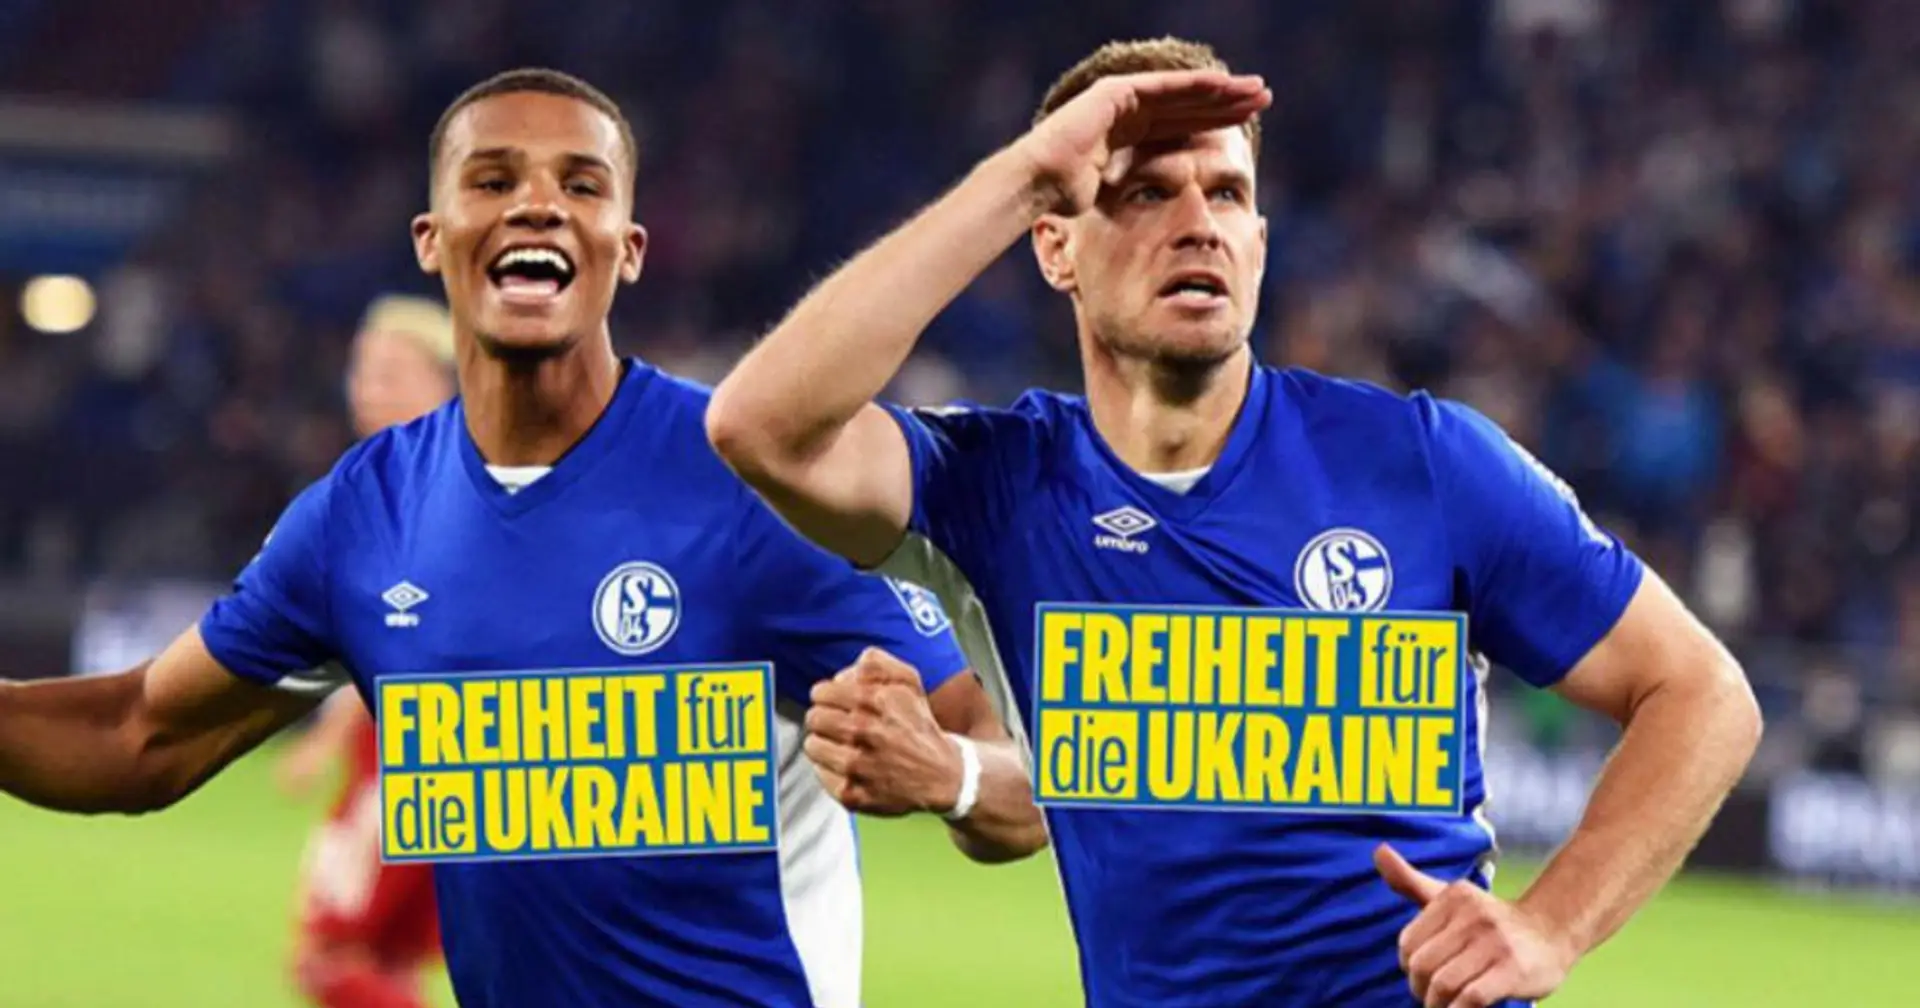 German publication Bild to cover Schalke's Gazprom logo with 'Free Ukraine' slogan